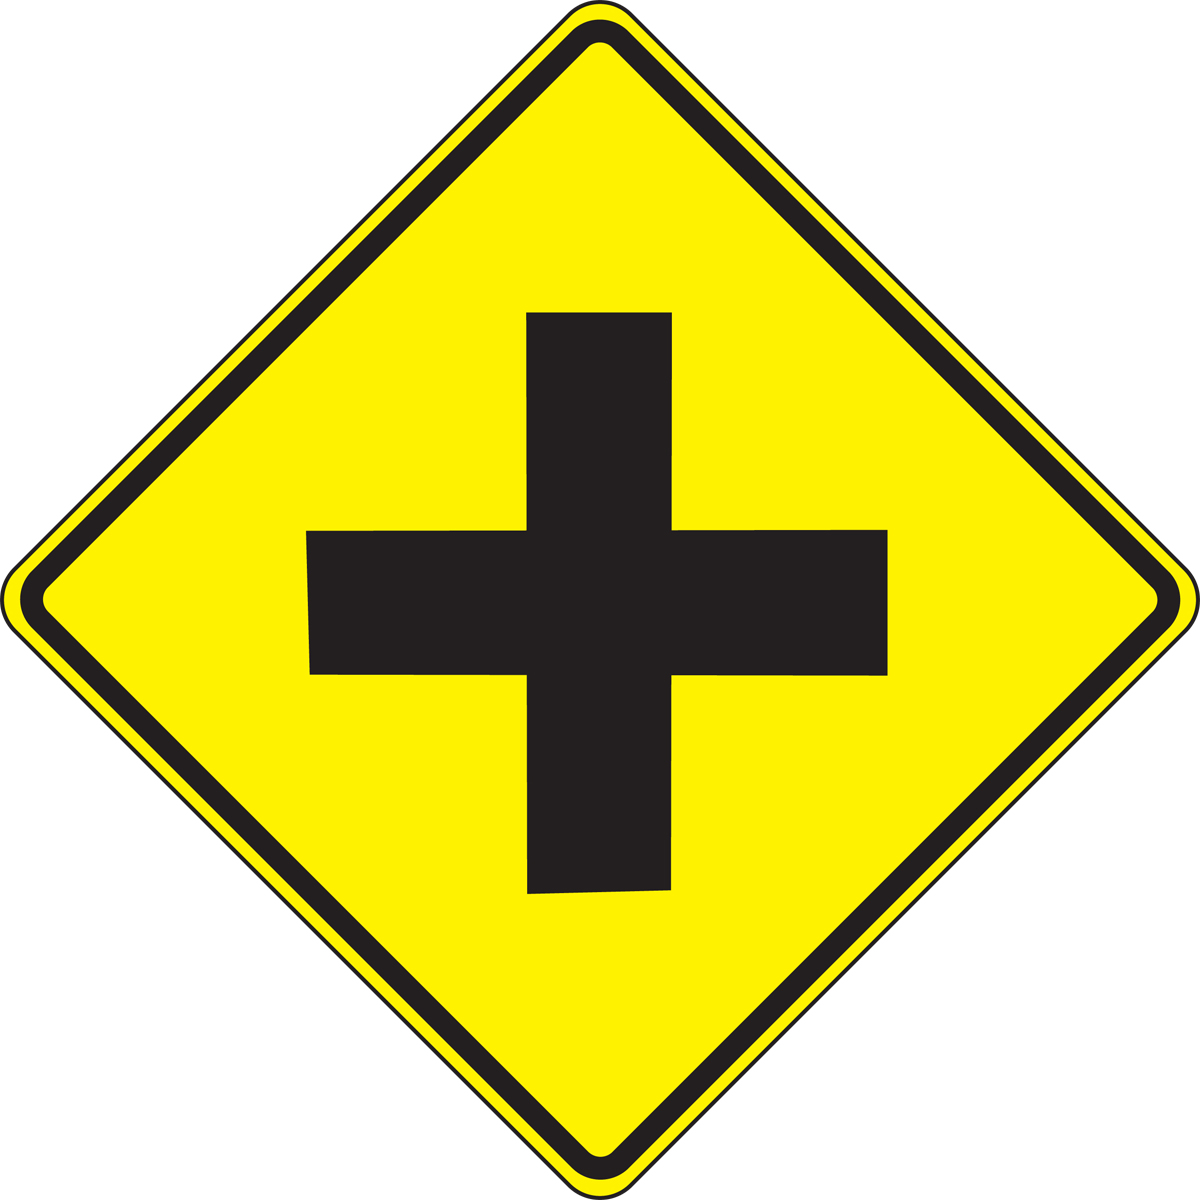 Intersection Warning Sign Cross Road Frw401ra